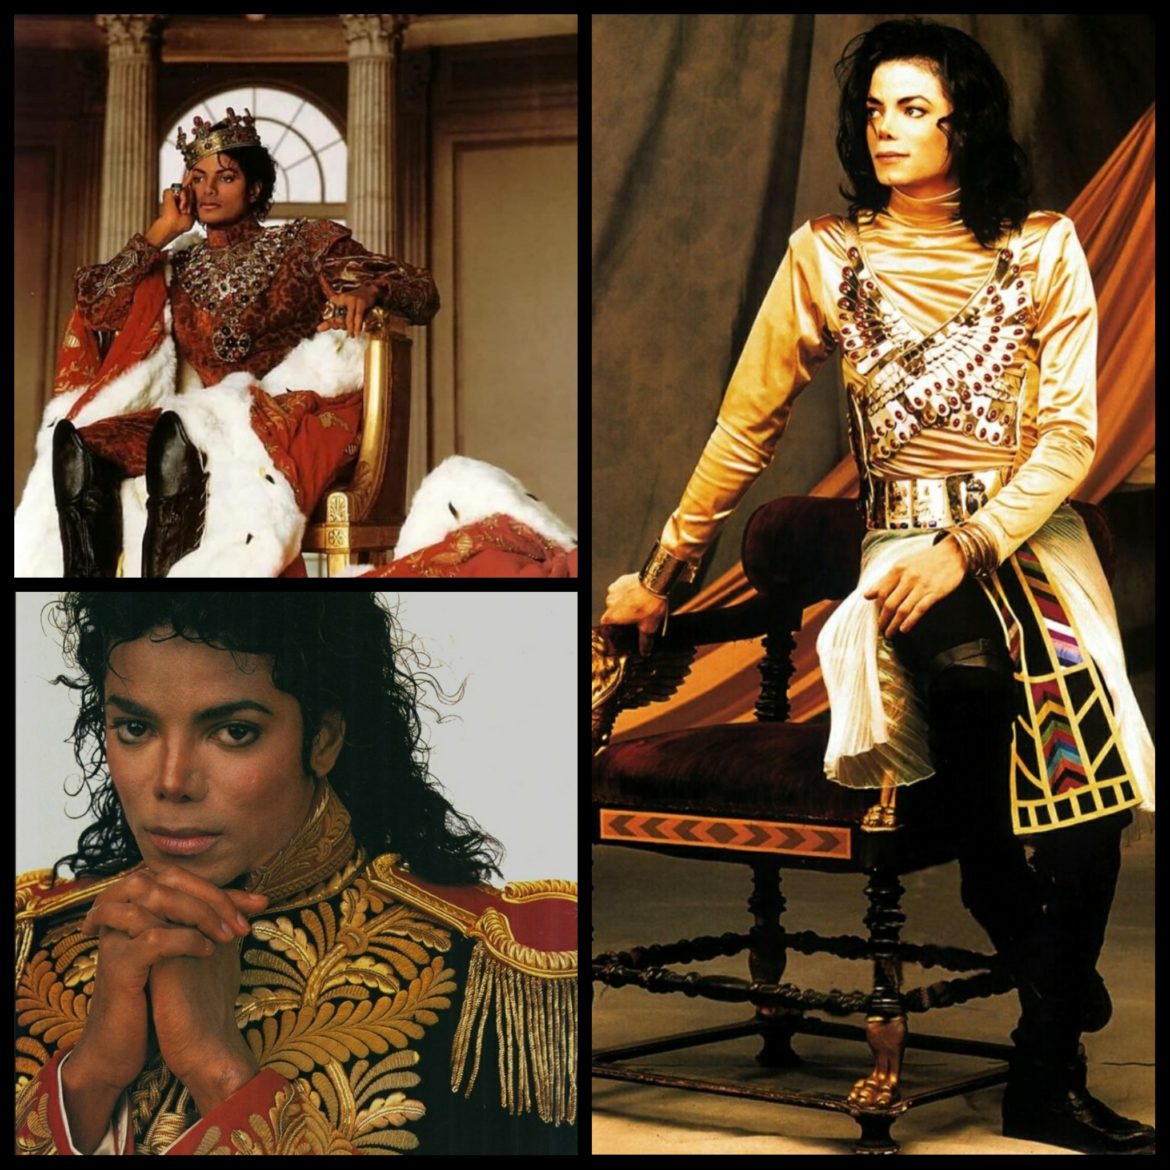 Happy Birthday to The King of Pop, Michael Jackson!